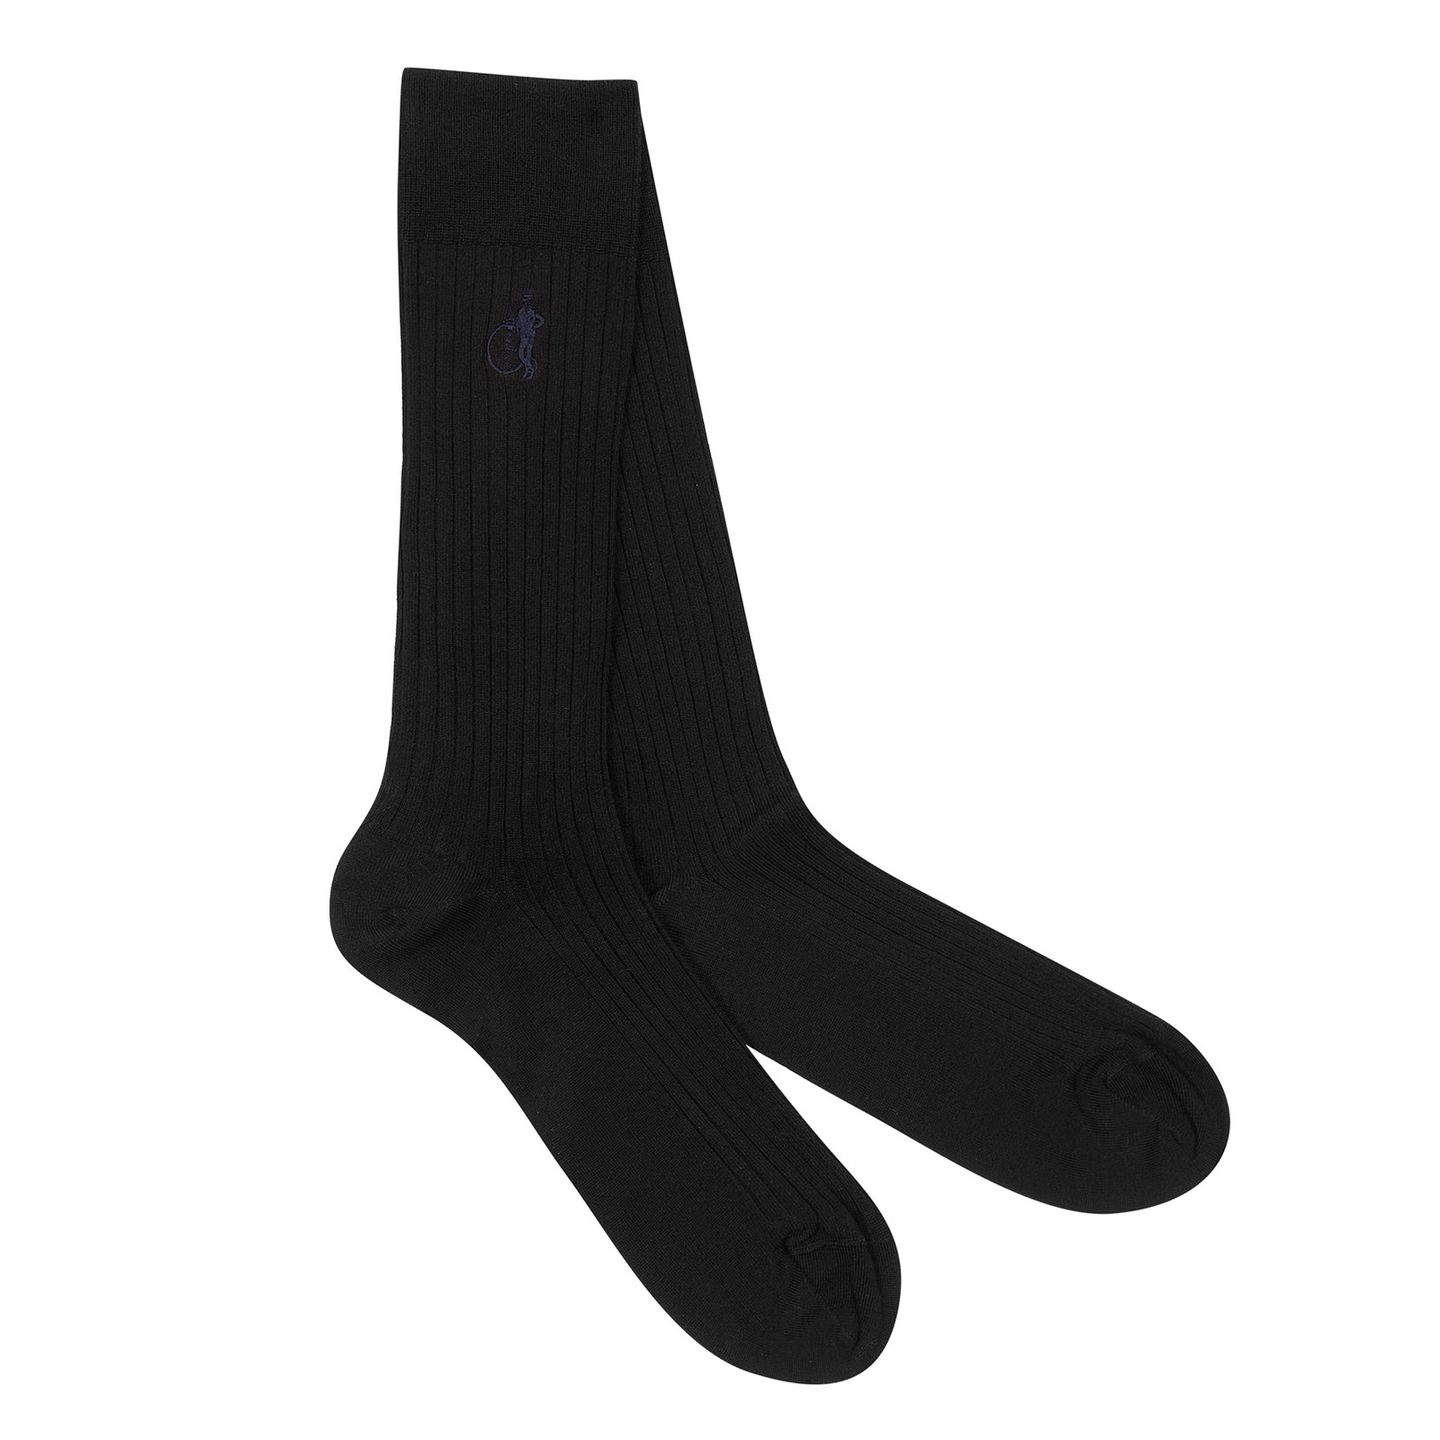 Pair of simply sartorial socks in ebony black